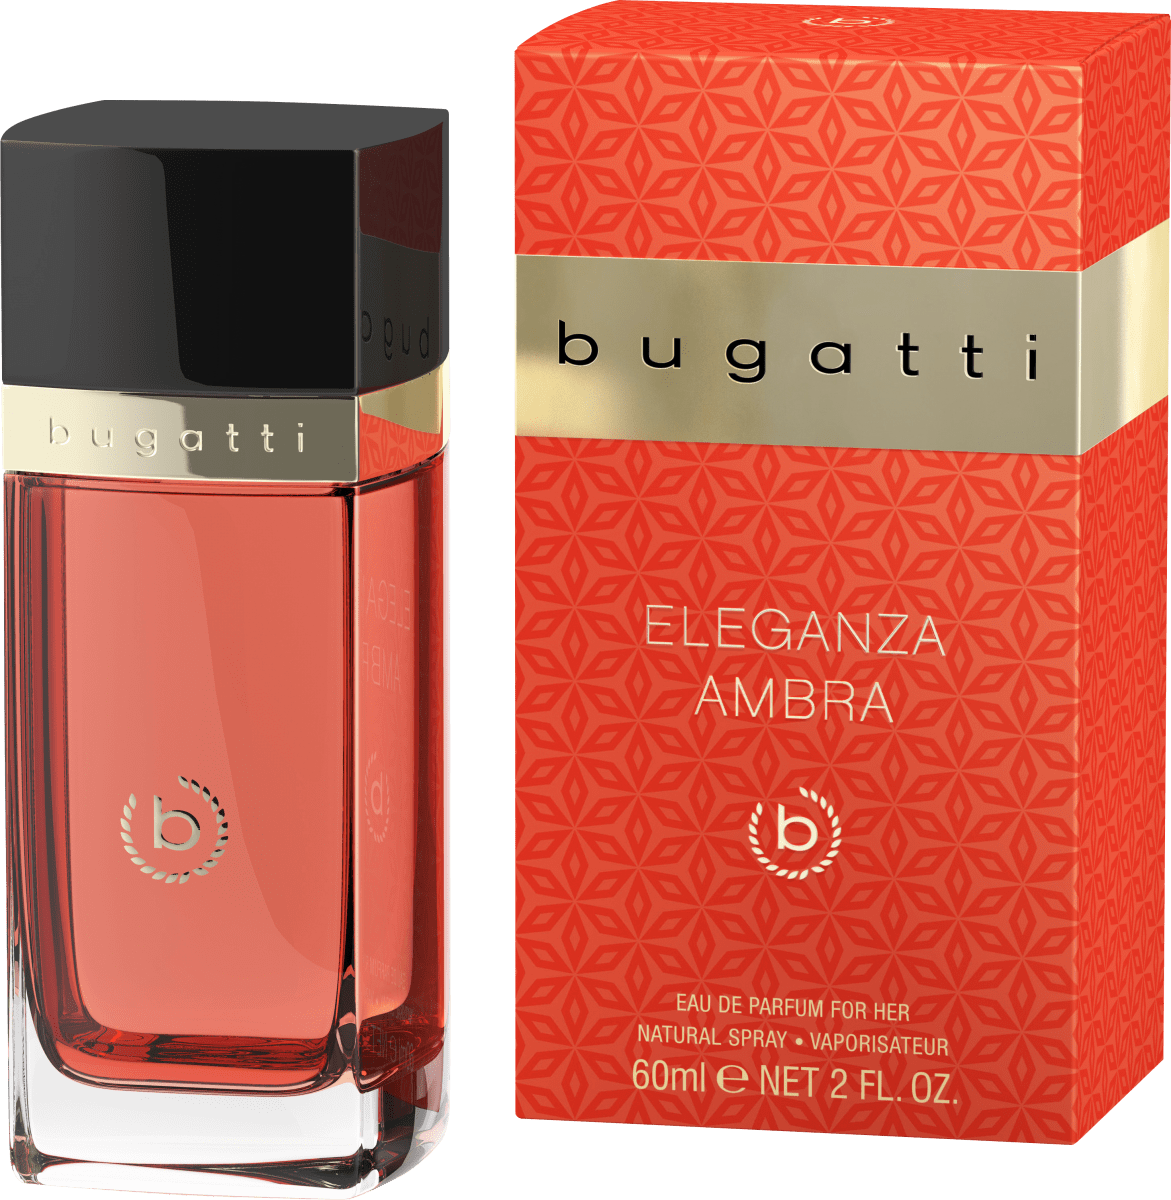 60 Eleganza ml Ambra bugatti de Parfum, Eau